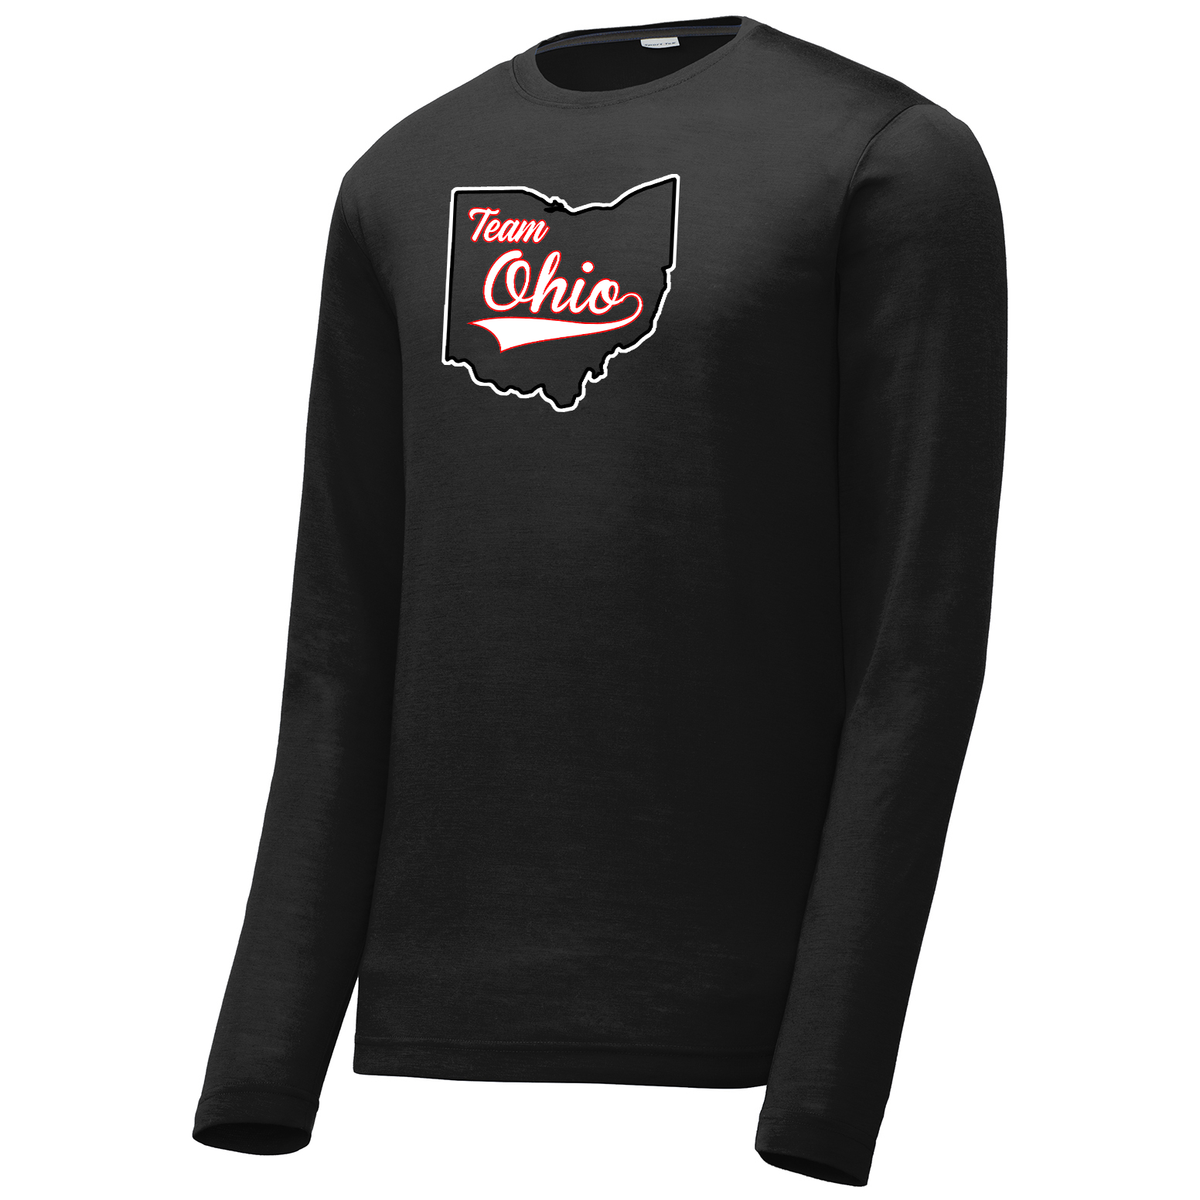 Team Ohio Softball Long Sleeve CottonTouch Performance Shirt